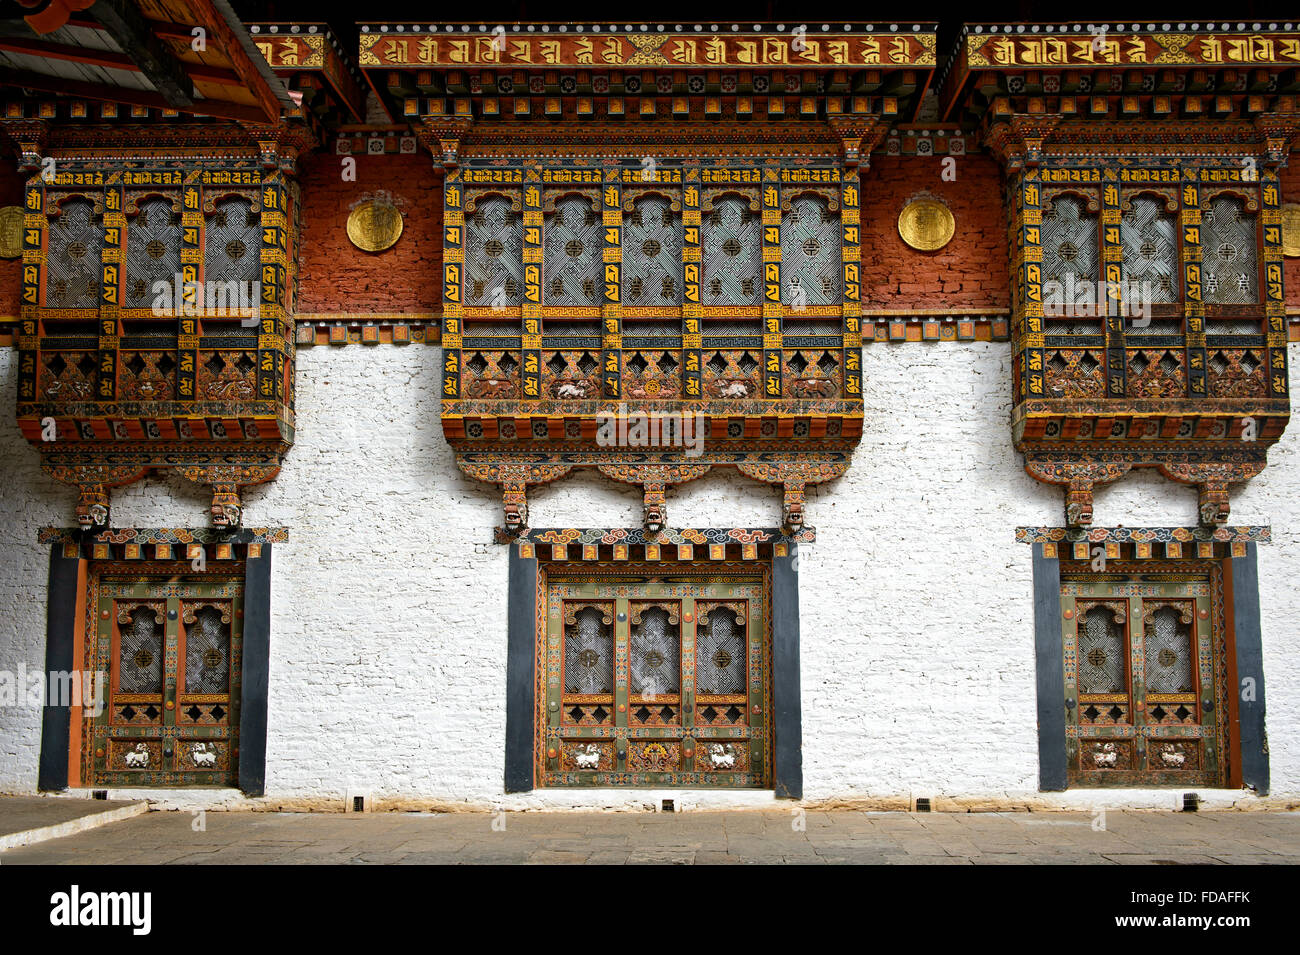 Wunderschön verzierten Fenster und Erker in der Punakha Dzong Kloster Festung, Punakha Bezirk, Bhutan Stockfoto